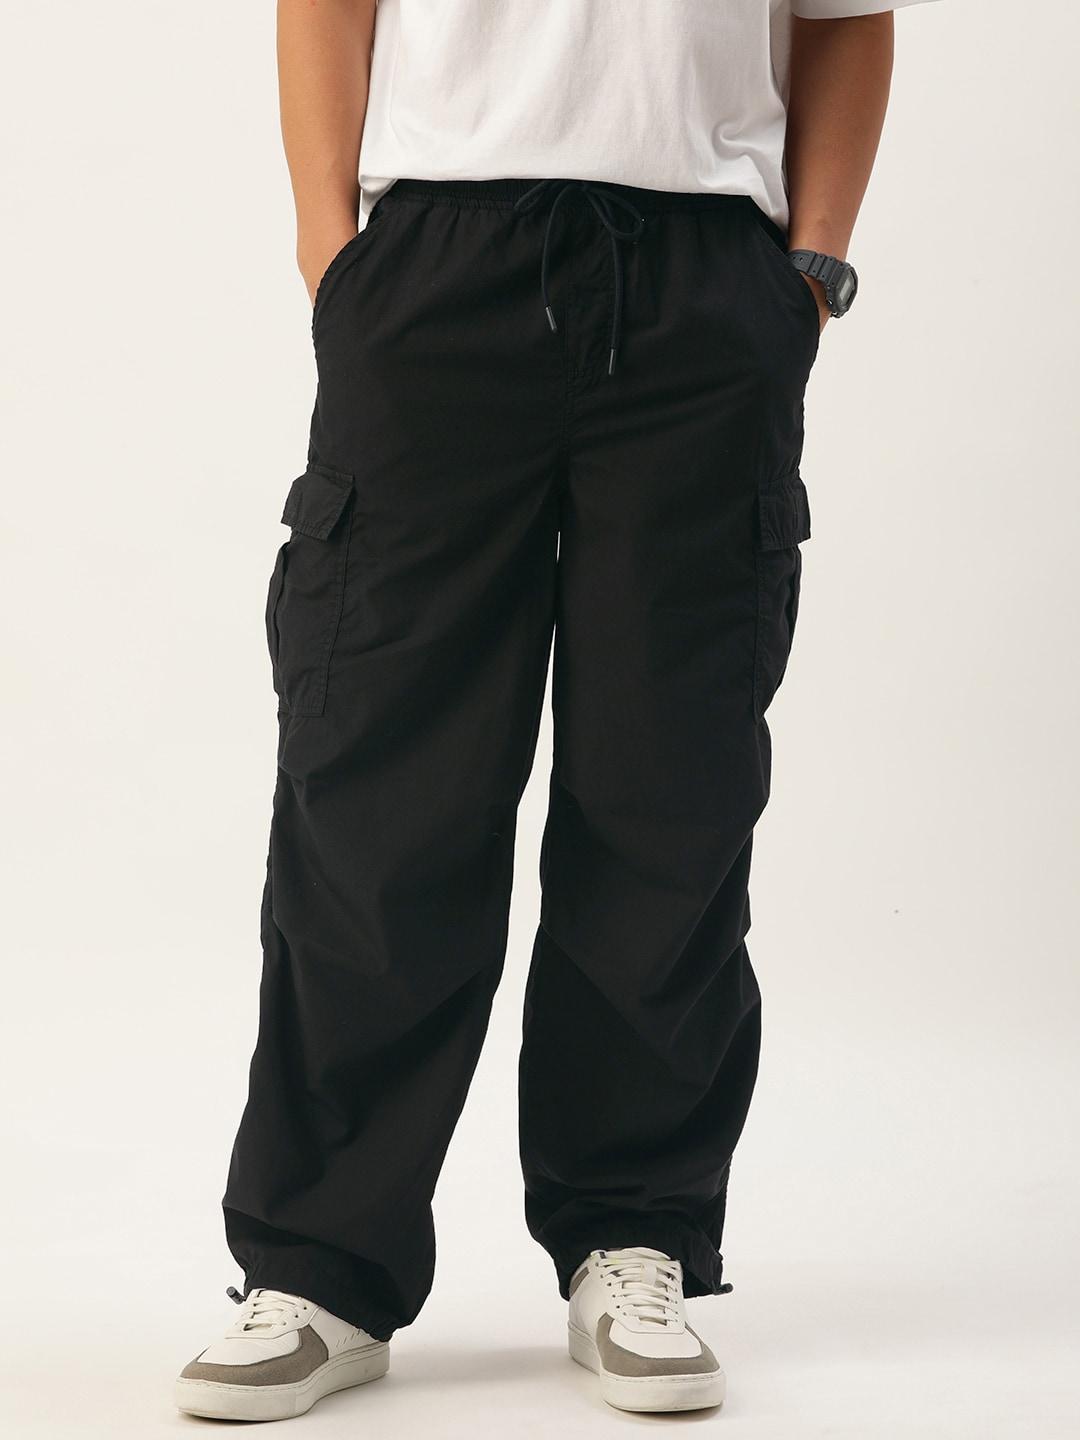 bene-kleed-unisex-black-parachute-fit-pure-cotton-cargos-trousers